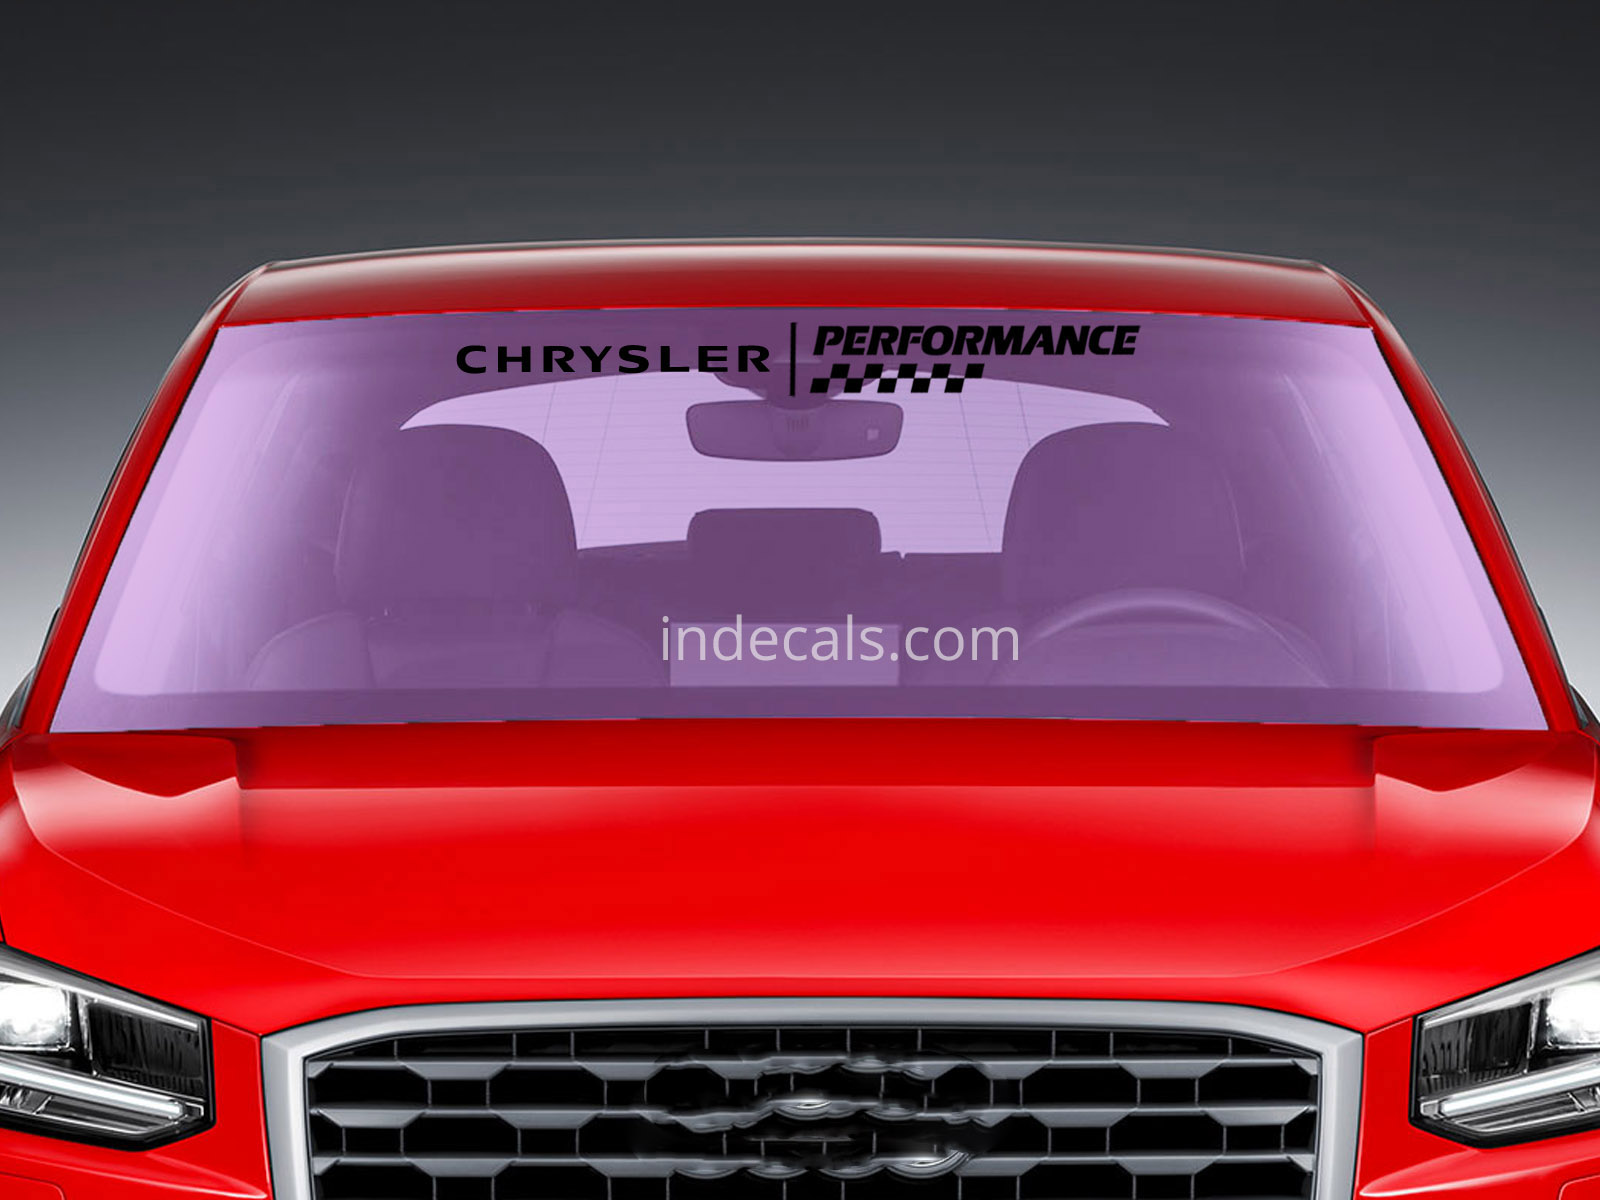 1 x Chrysler Performance Sticker for Windshield or Back Window - Black